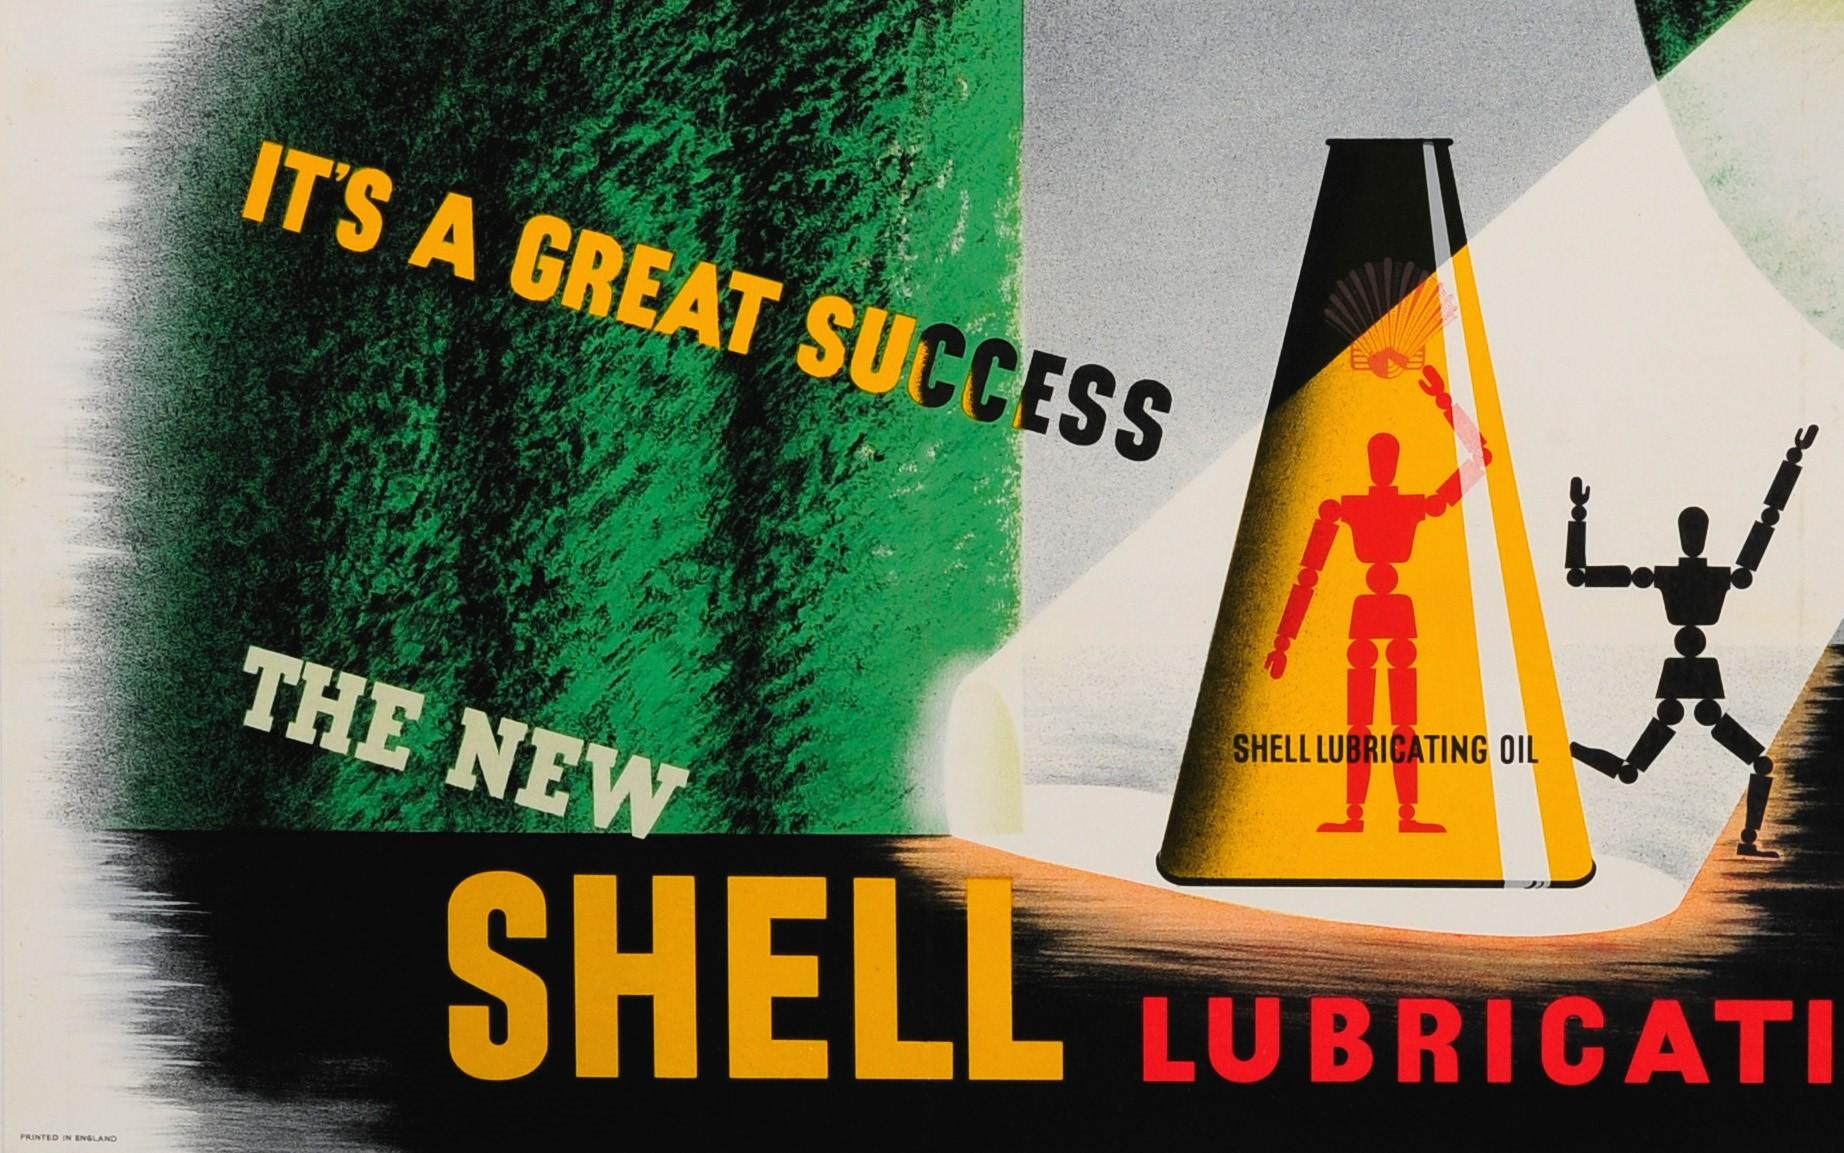 Original Vintage Poster New Shell Lubricating Oil Great Success Artist Mannequin - Print by Edward McKnight Kauffer